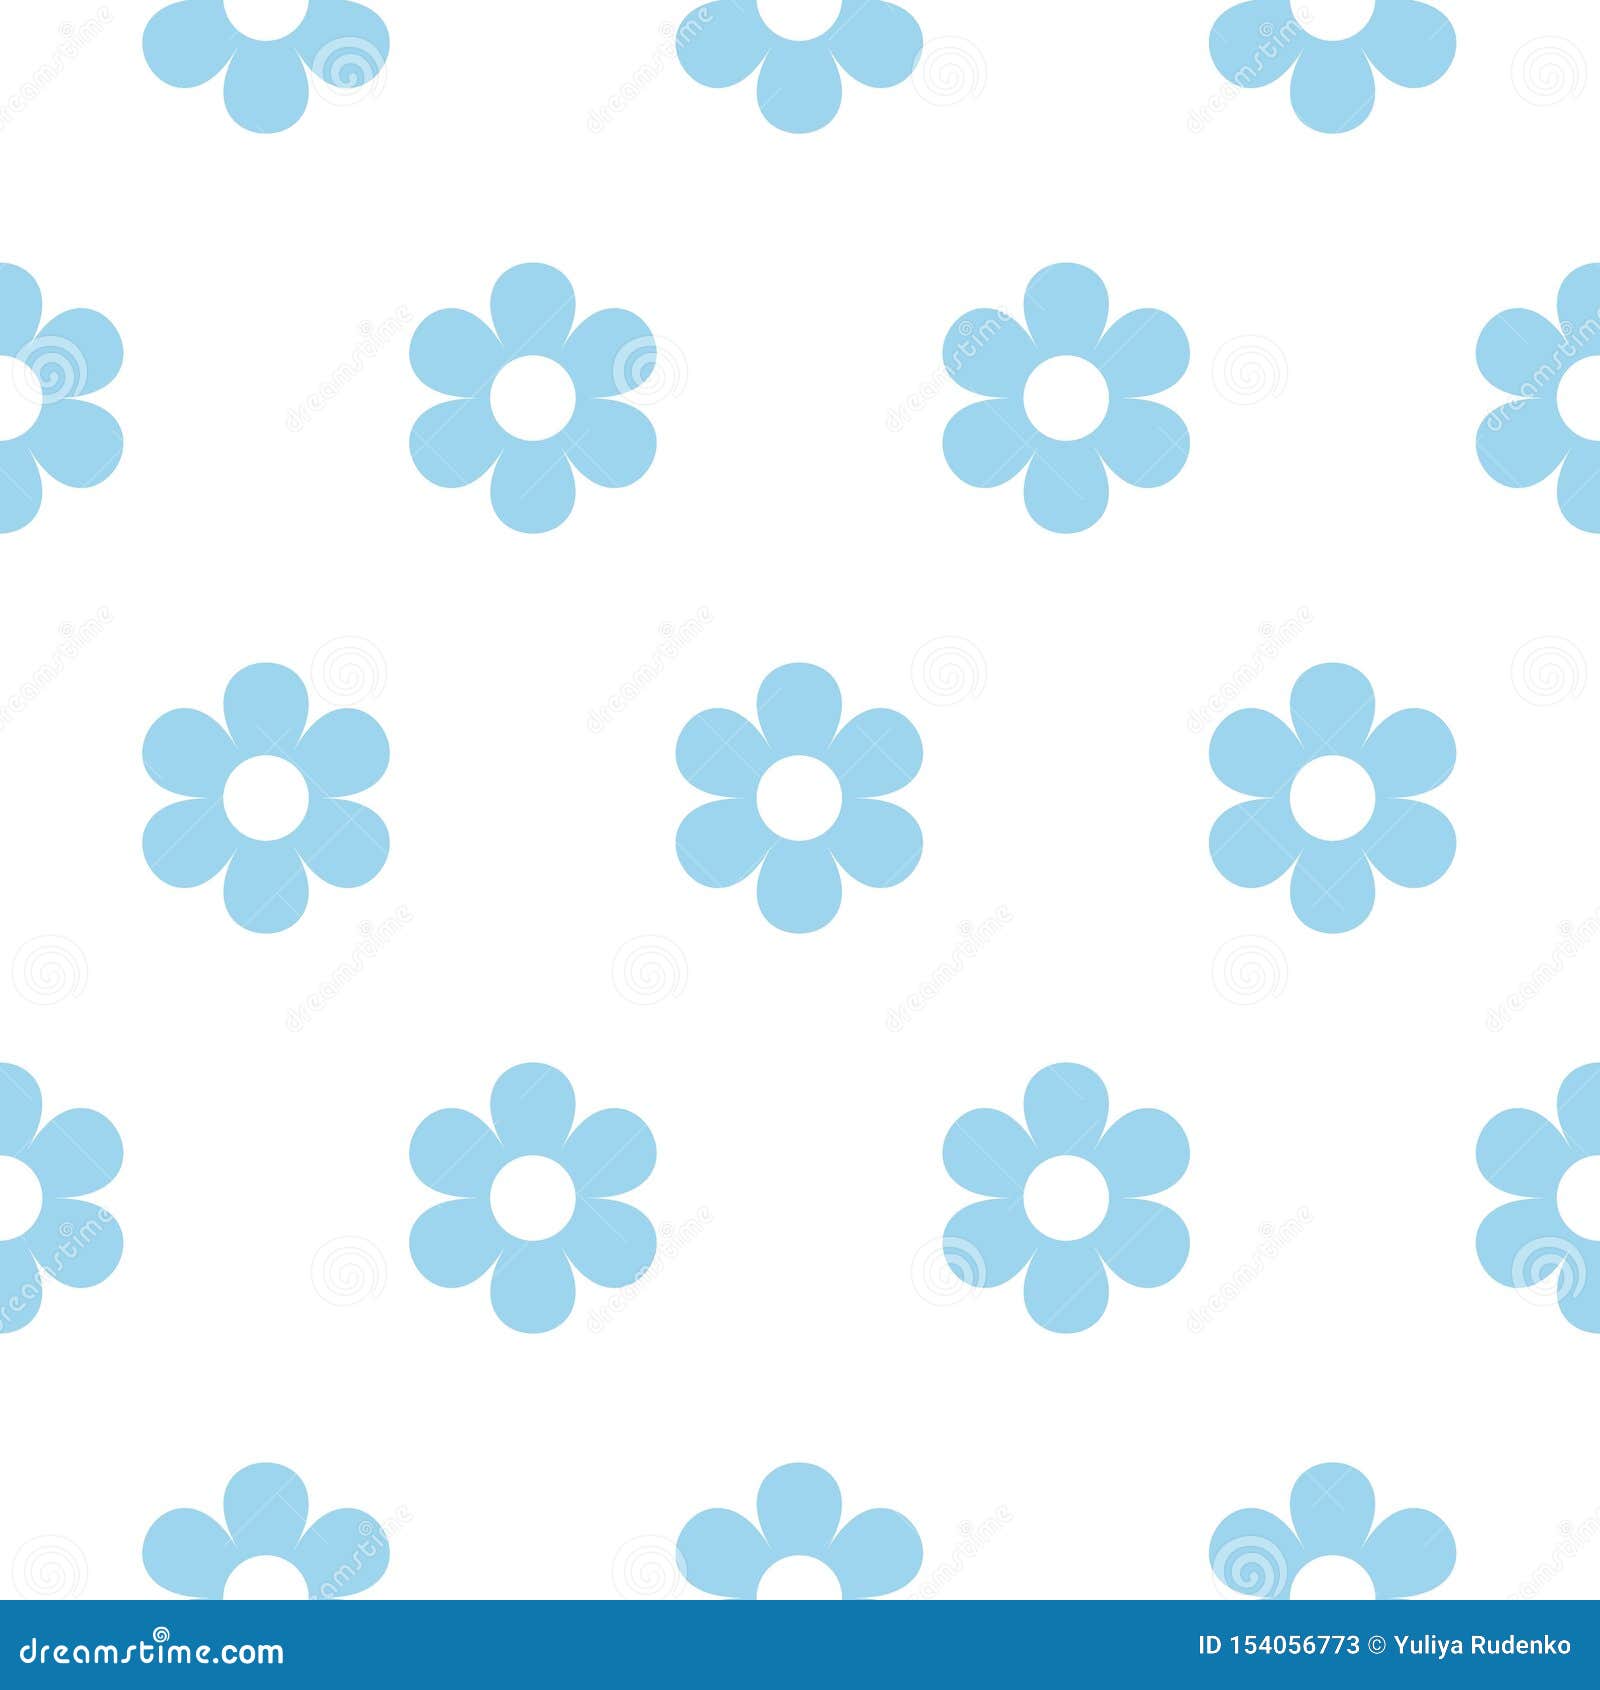 71+] Cute Blue Wallpaper - WallpaperSafari